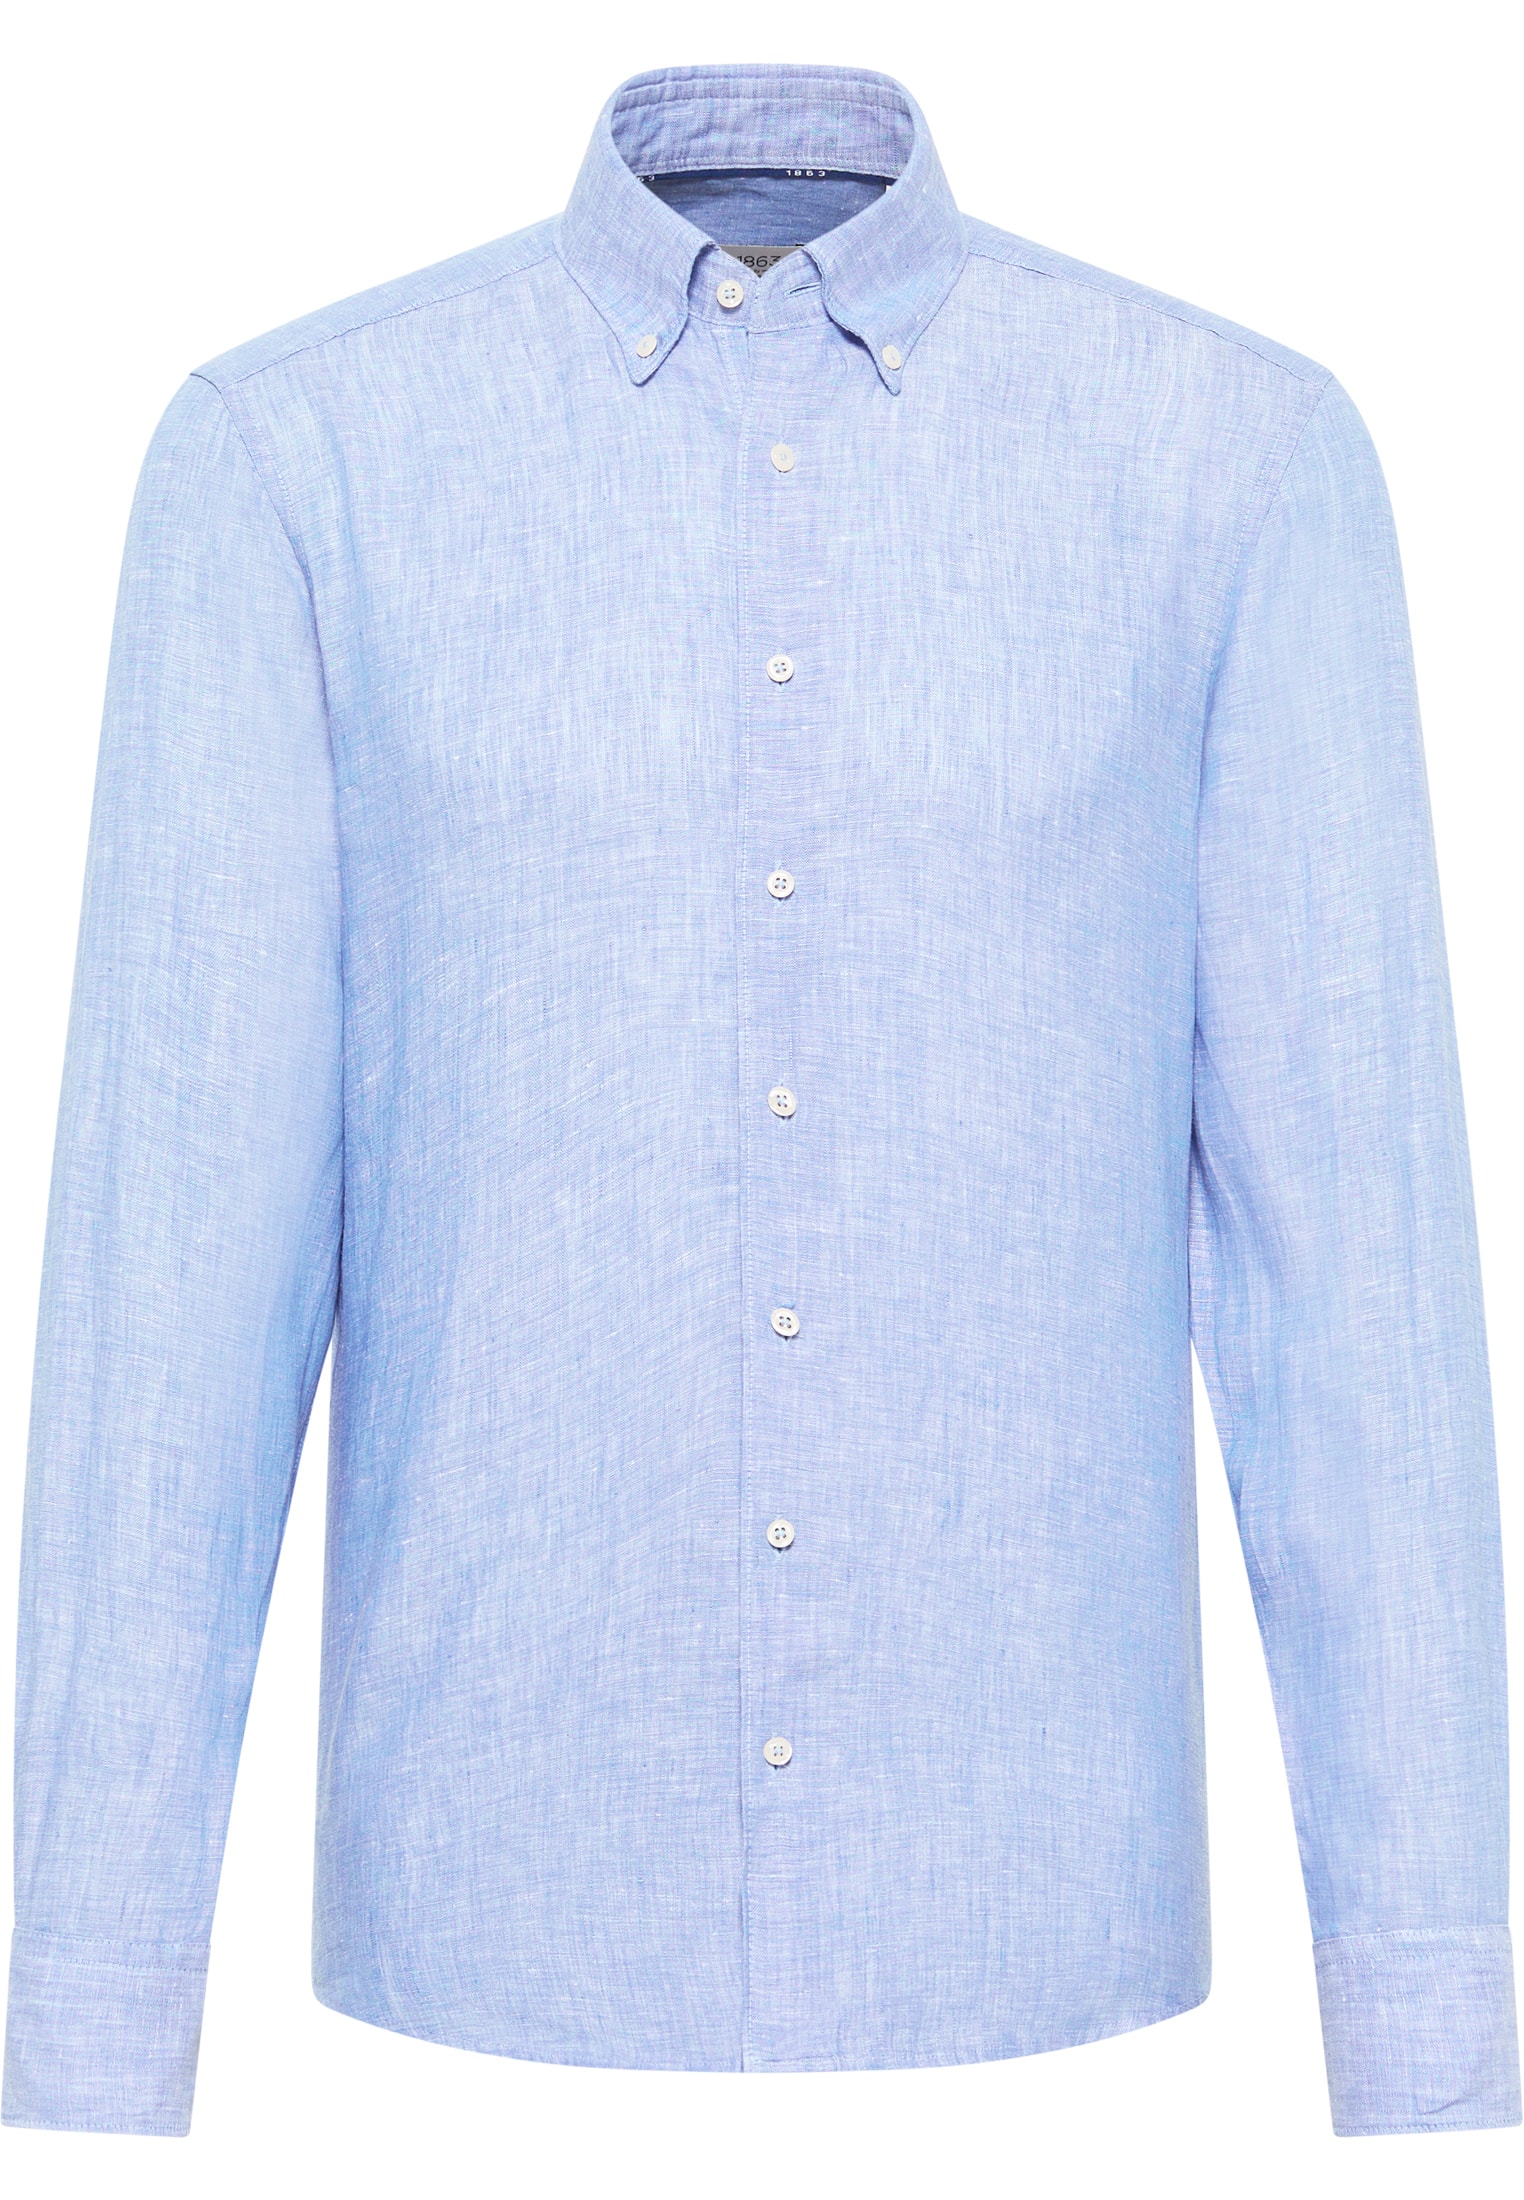 SLIM FIT Shirt in medium blue plain